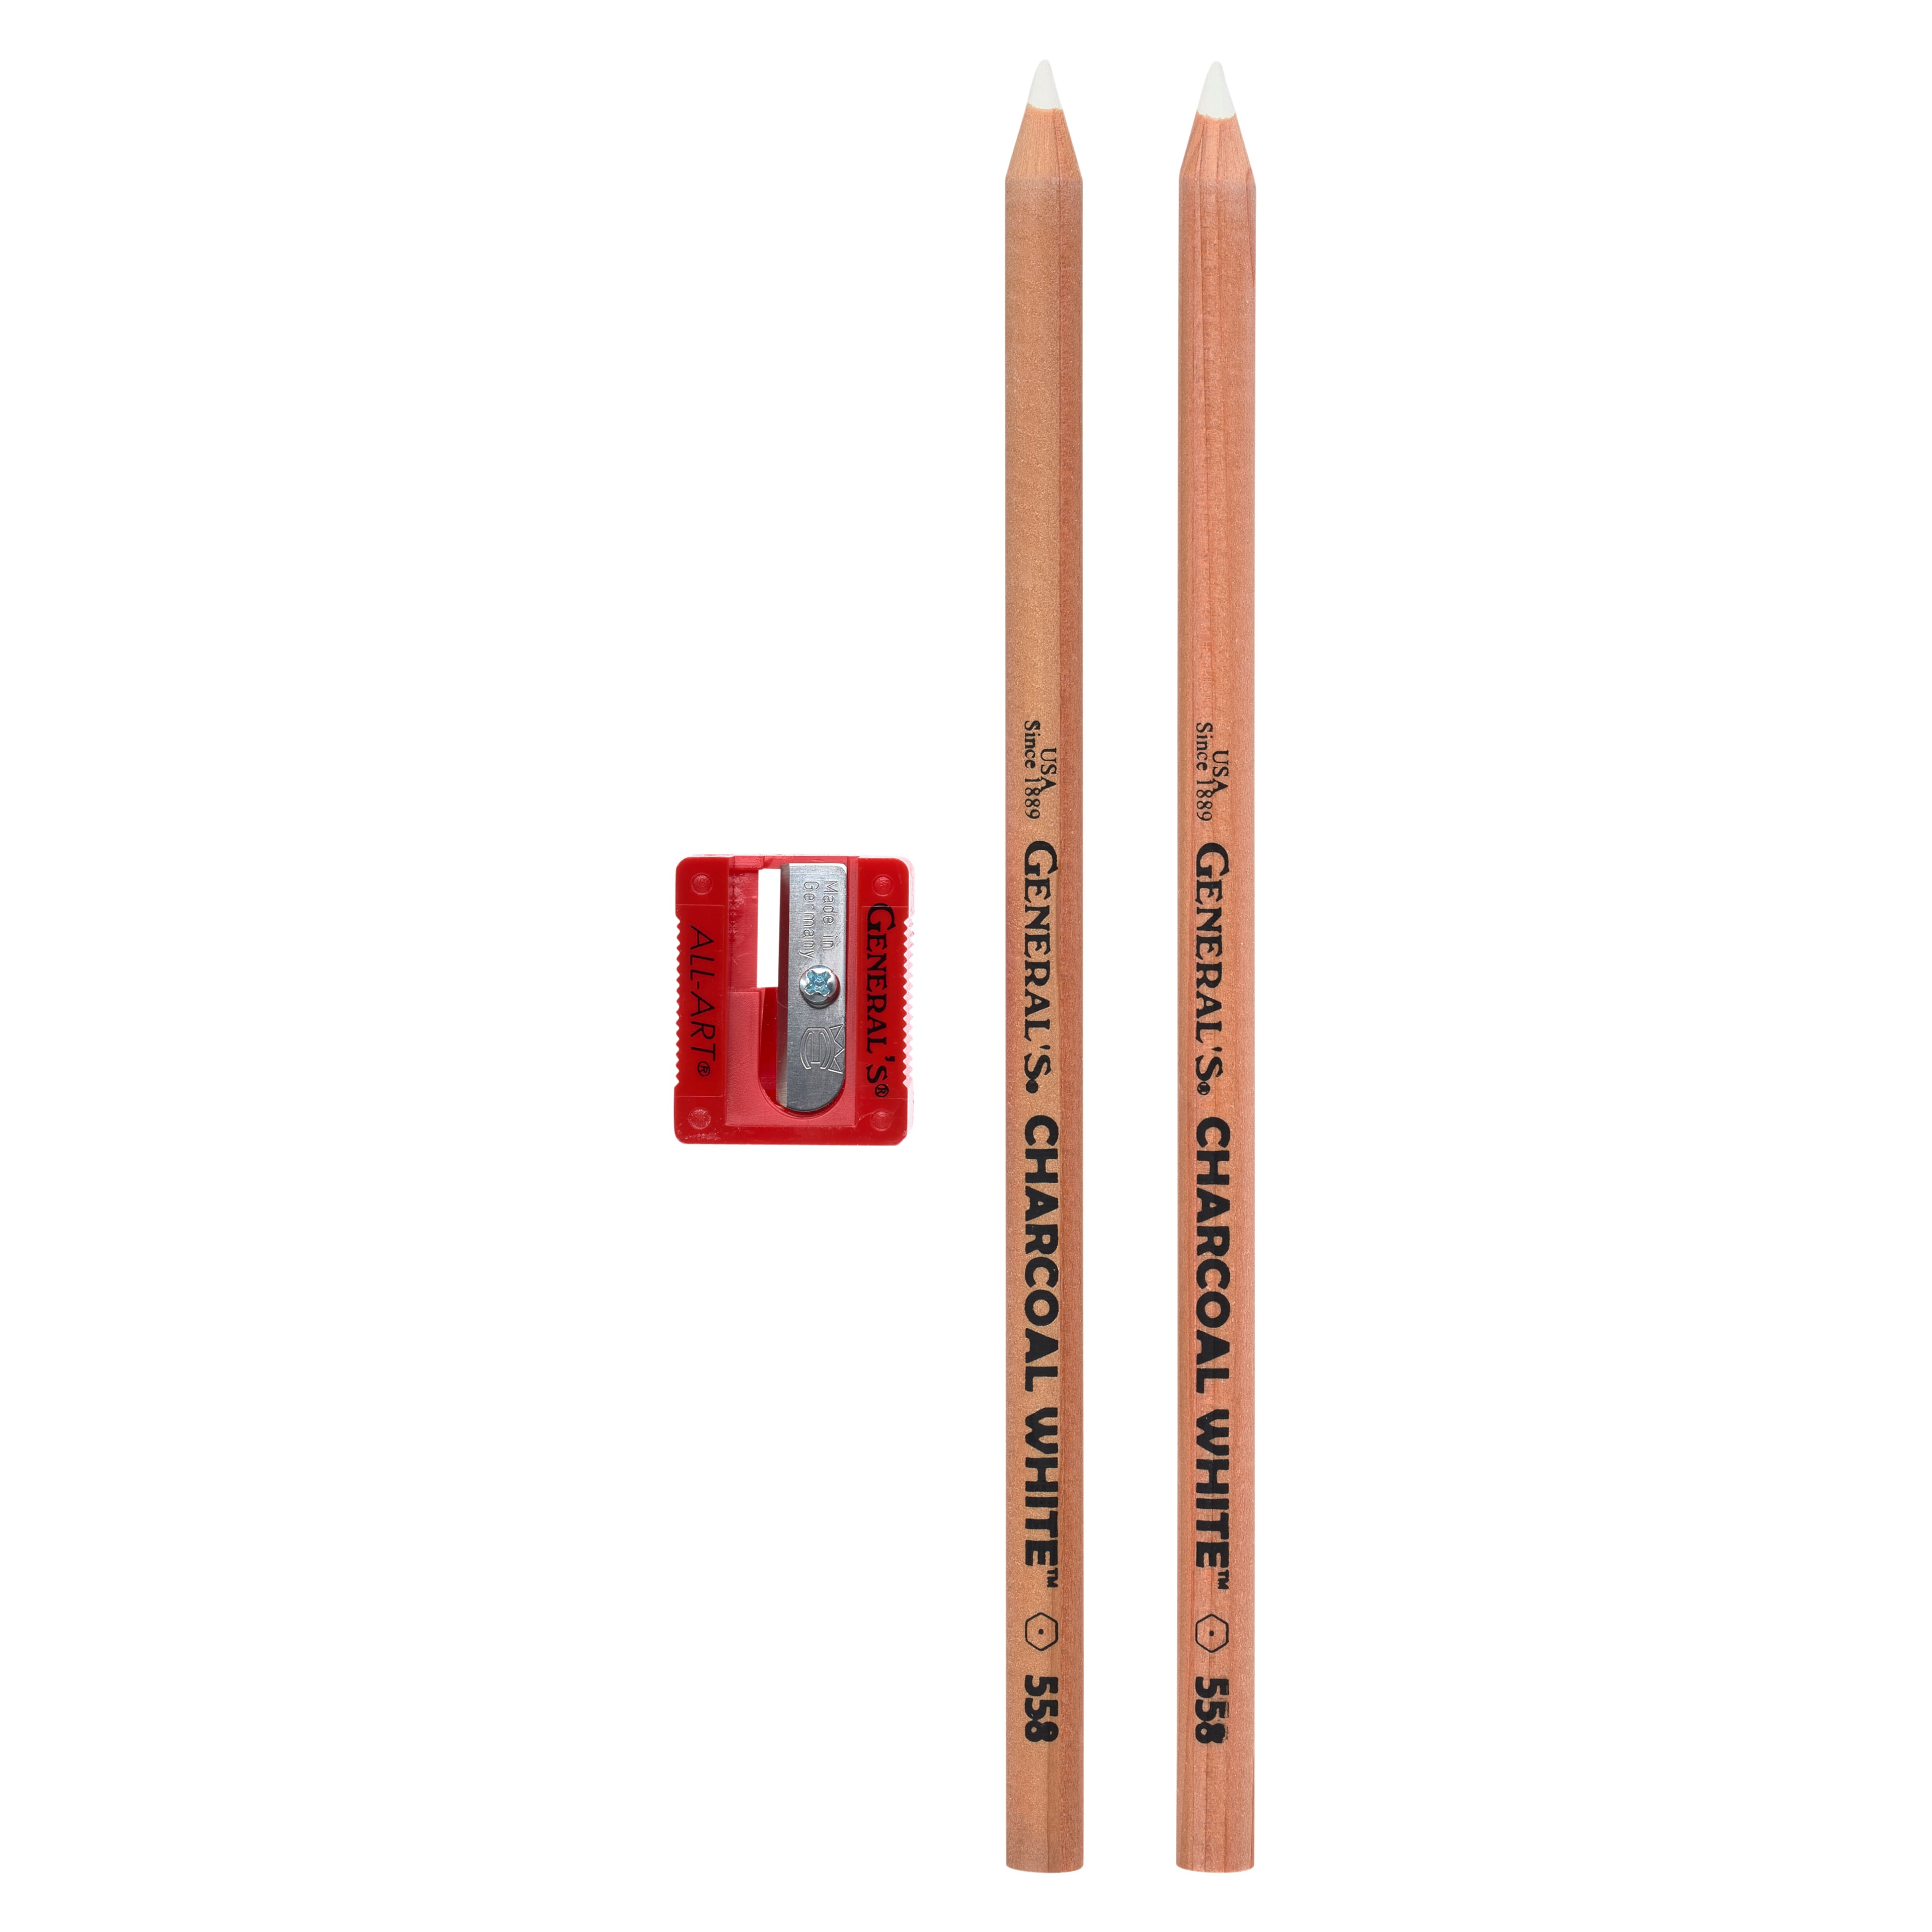 Necessities™ Multi Purpose Long & Short Handle Brush Set by